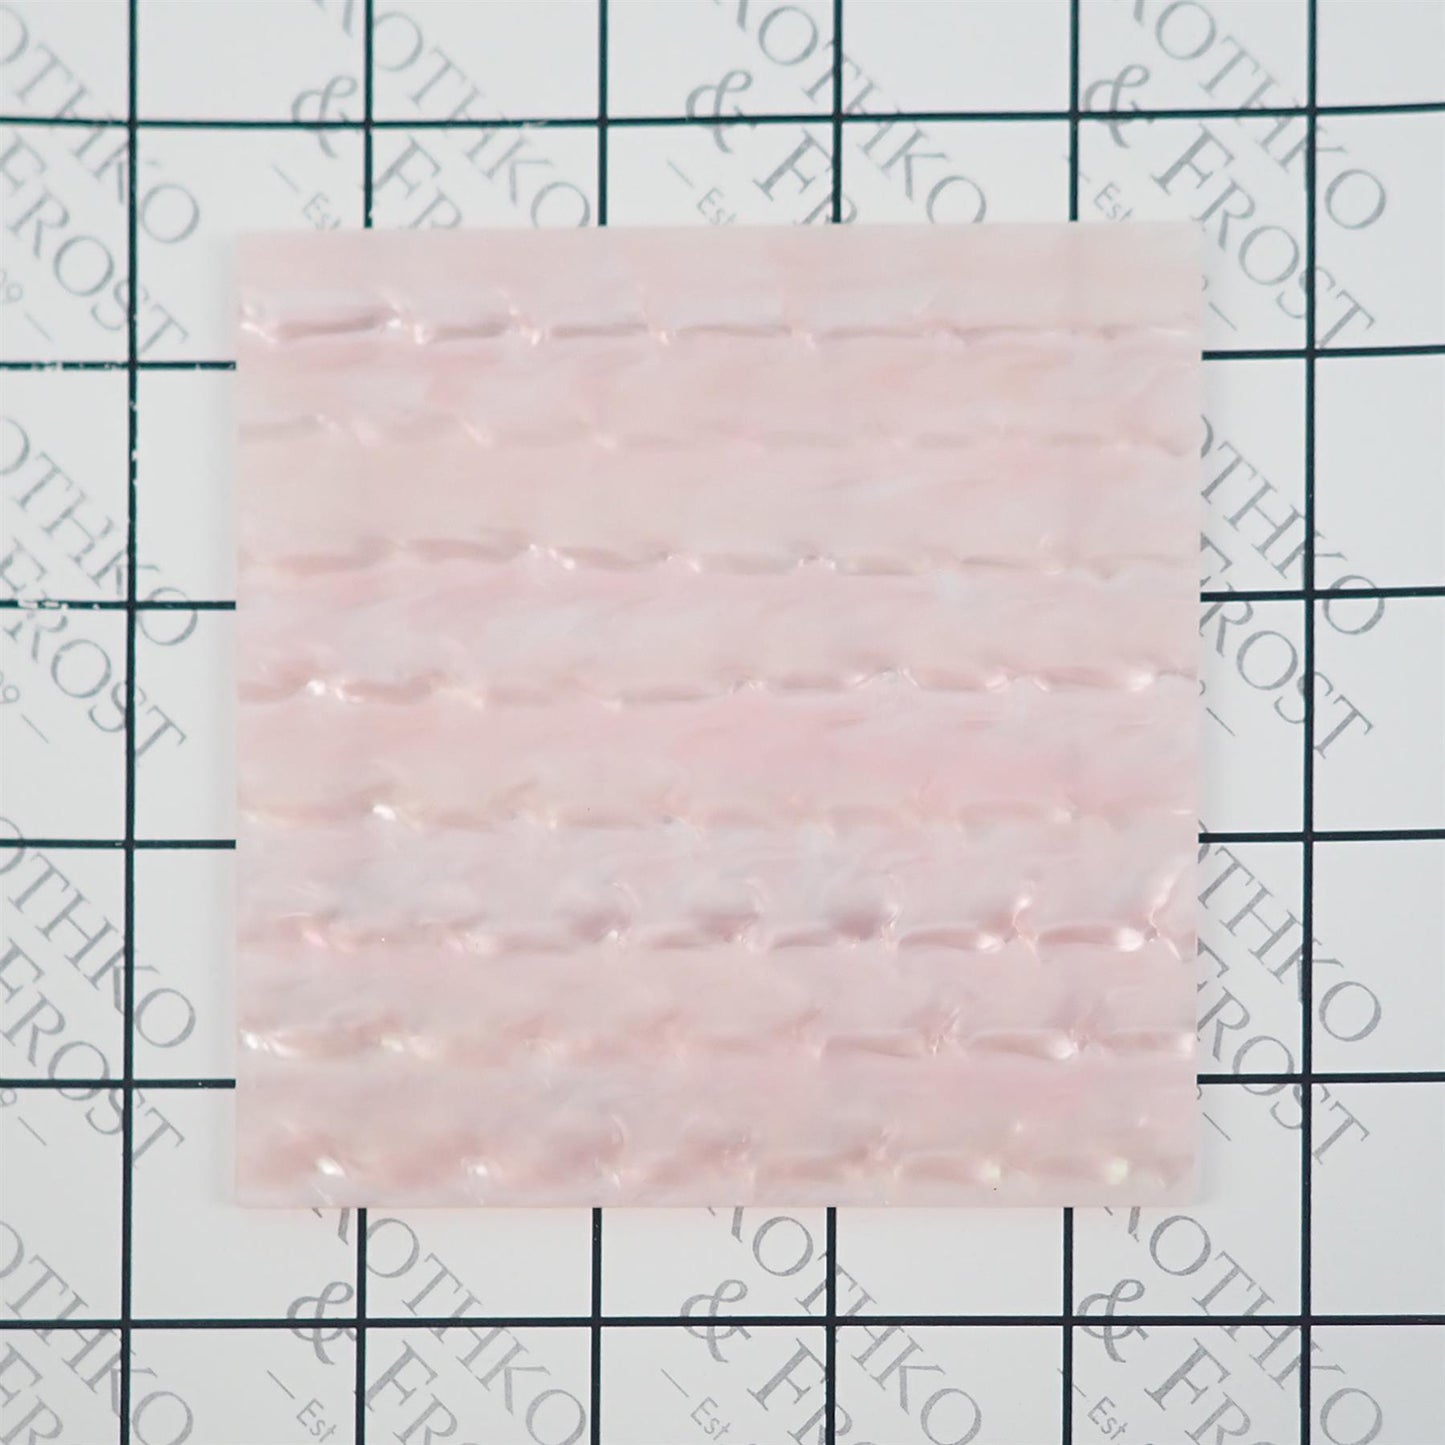 Incudo Light Pink Snakeskin Acrylic Sheet - 600x400x3mm